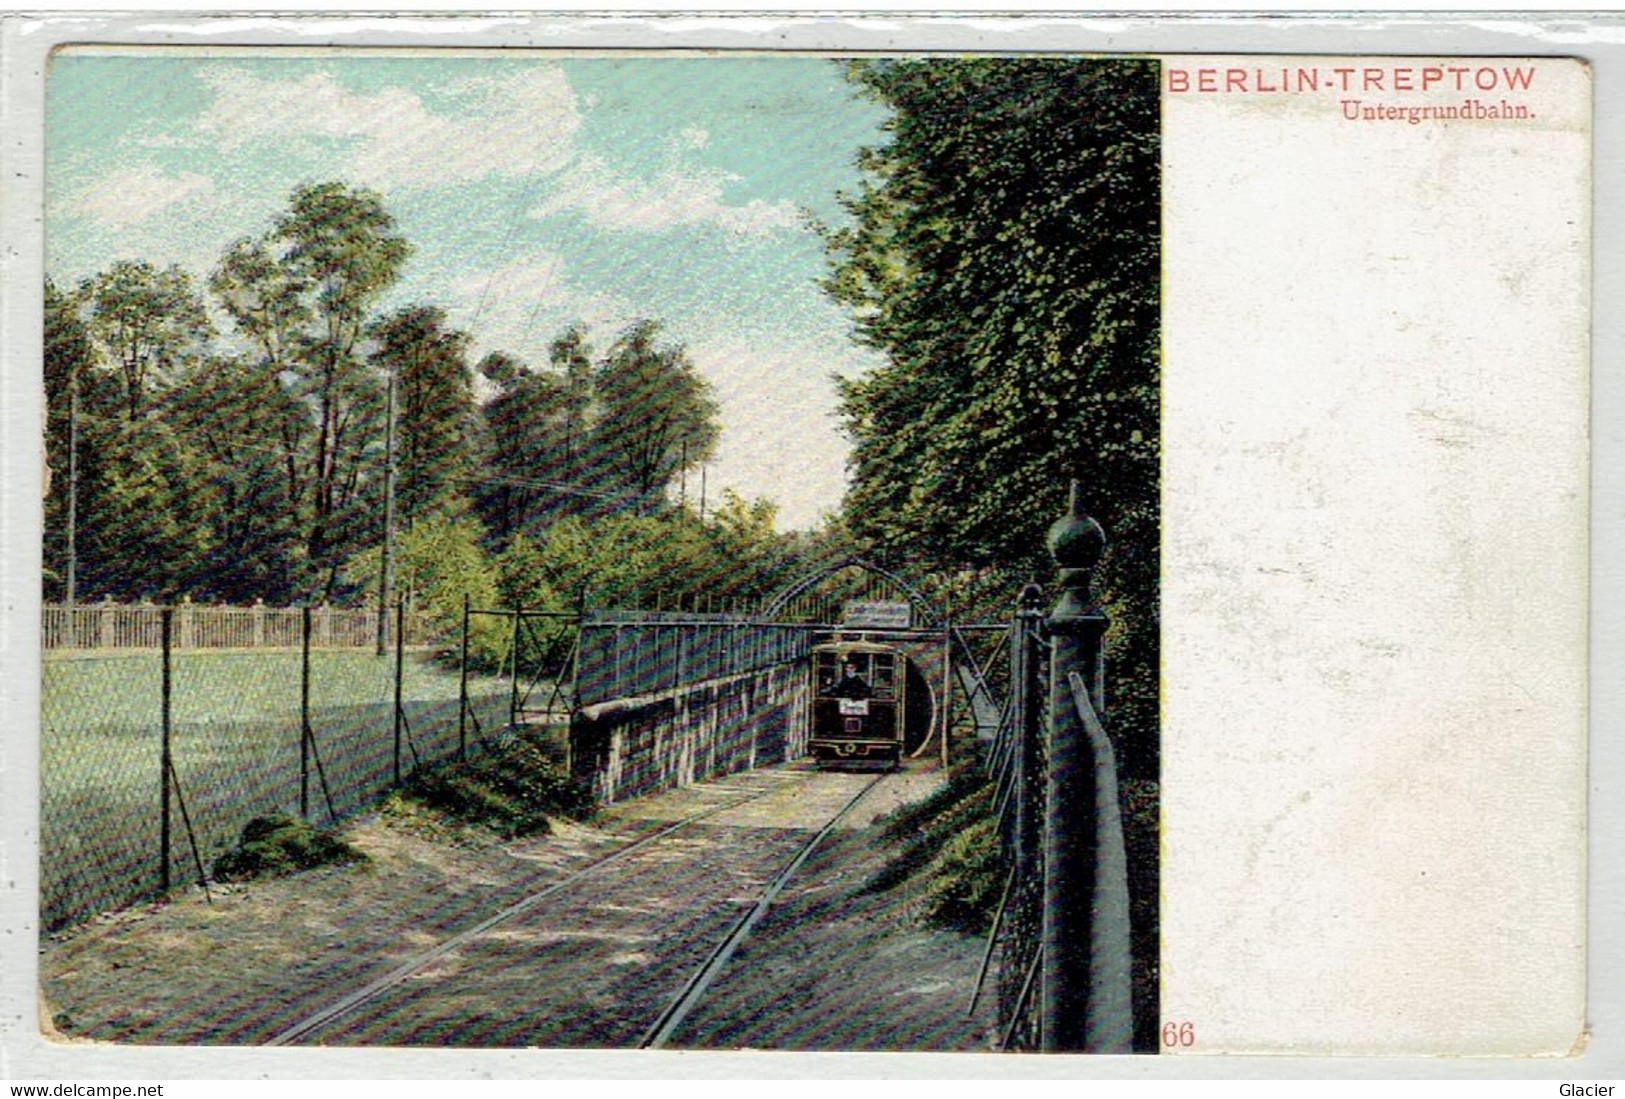 Berlin-Treptow - Untergrundbahn - Tram - Treptow